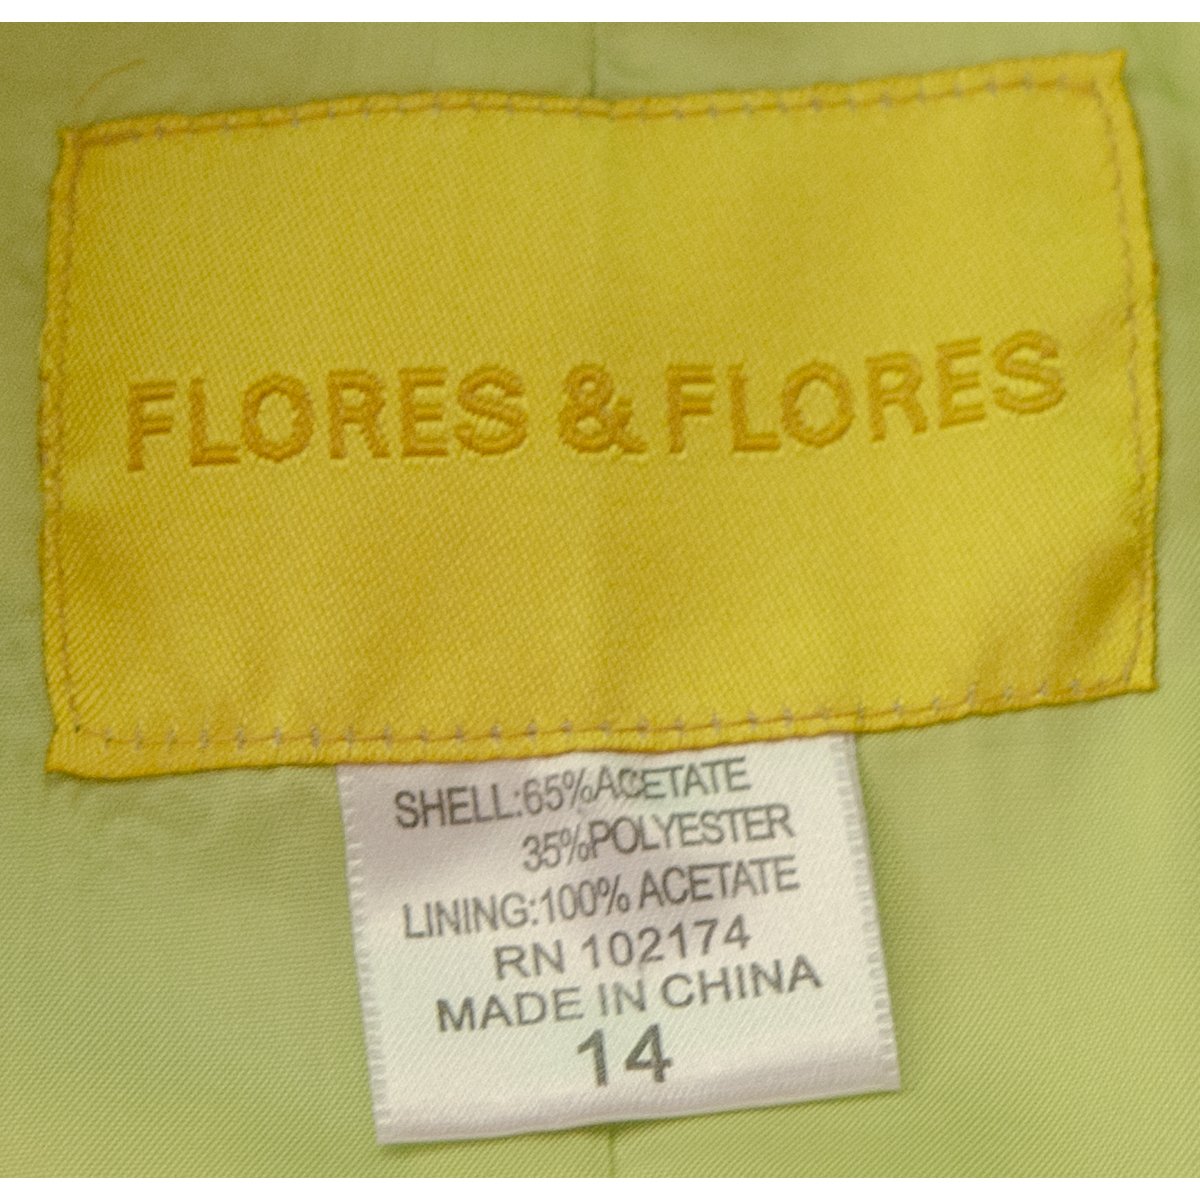 Flores & Flores Green Floral Jacket & Bustier, Size 14